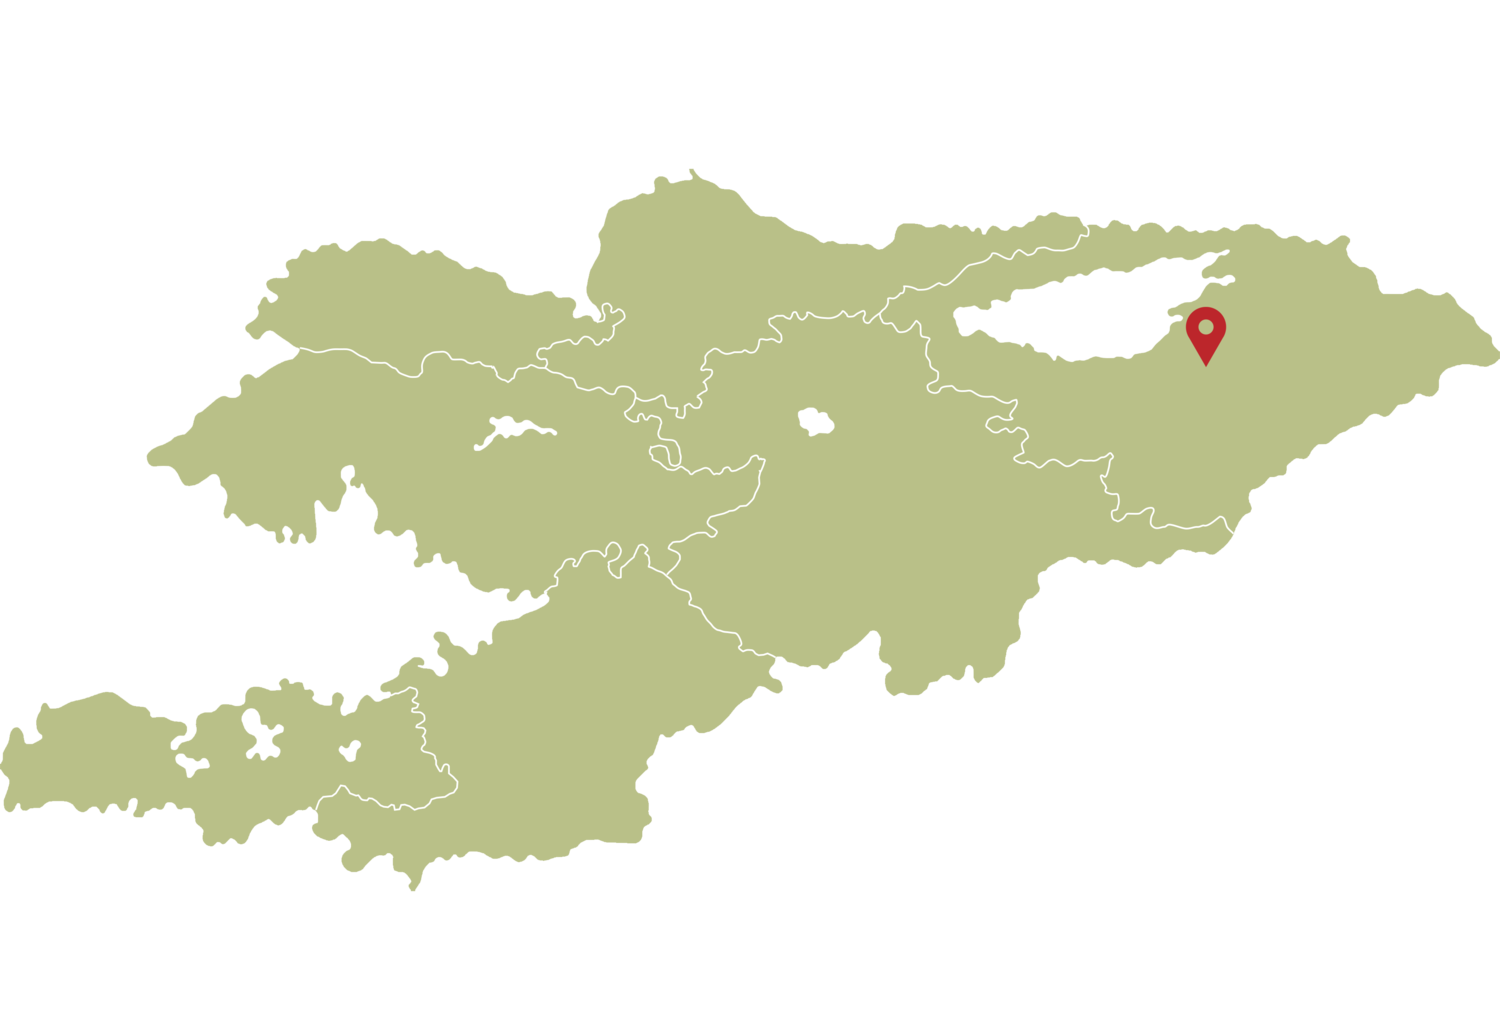 Location Juuku valley